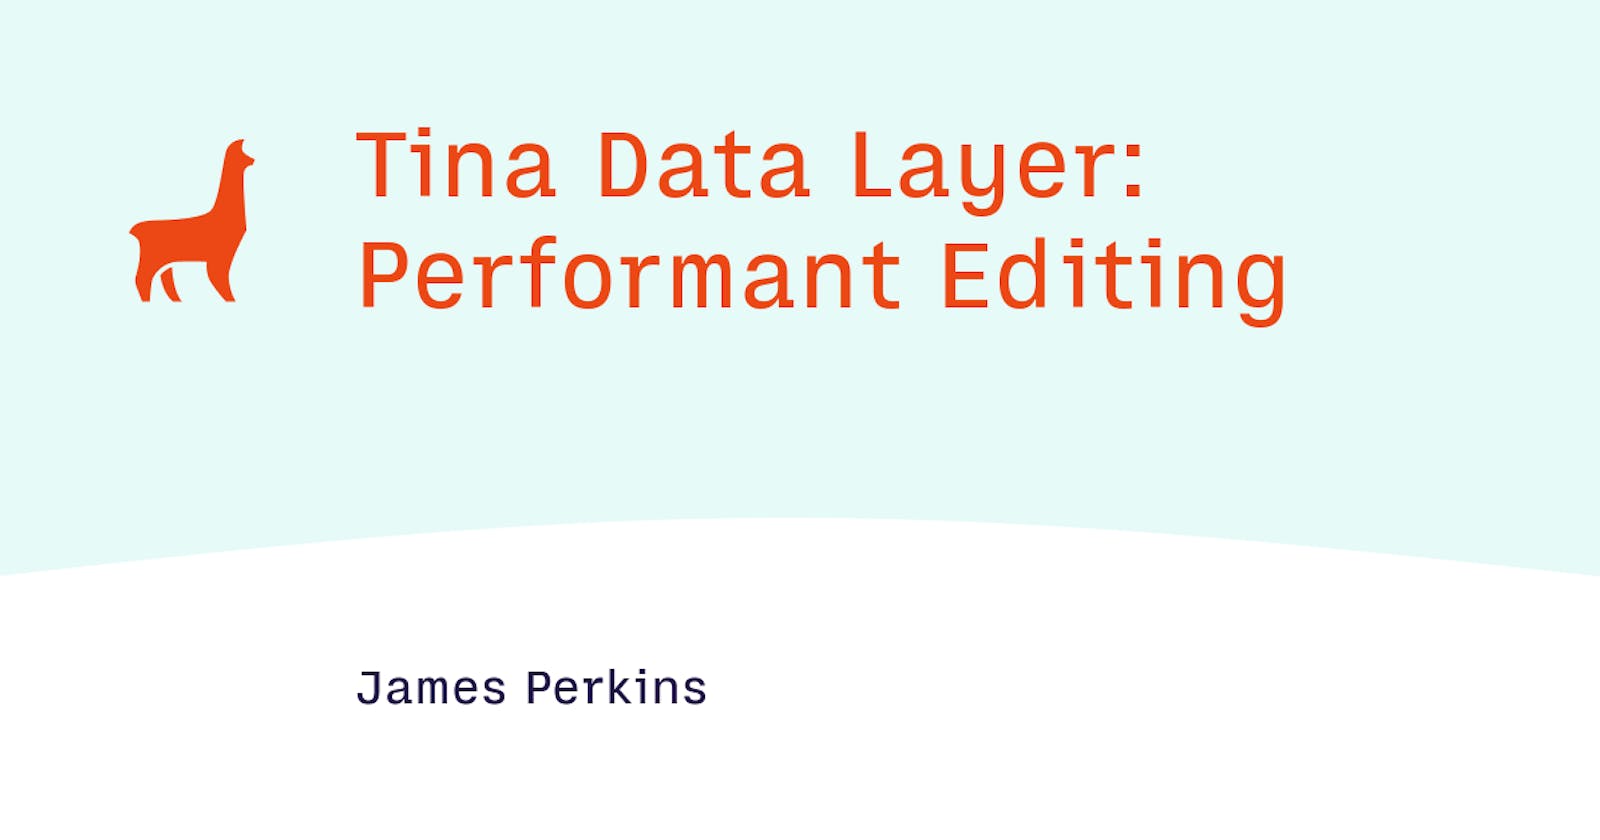 Tina Data Layer: Performant Editing